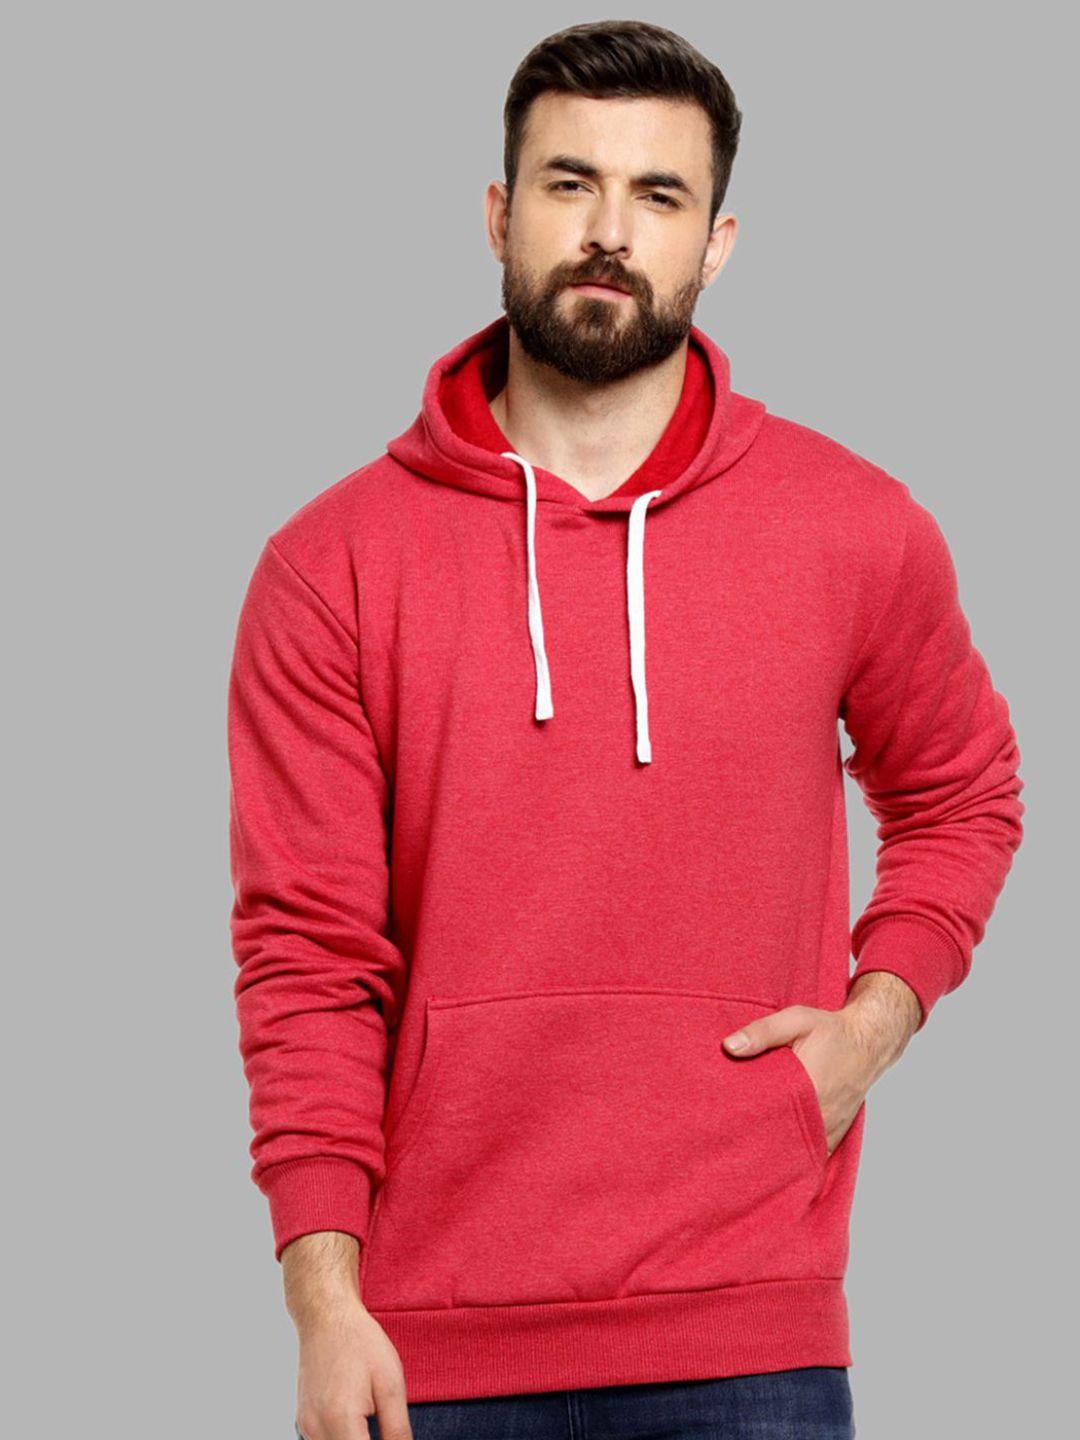 campus-sutra-men-maroon-solid-hooded-sweatshirt